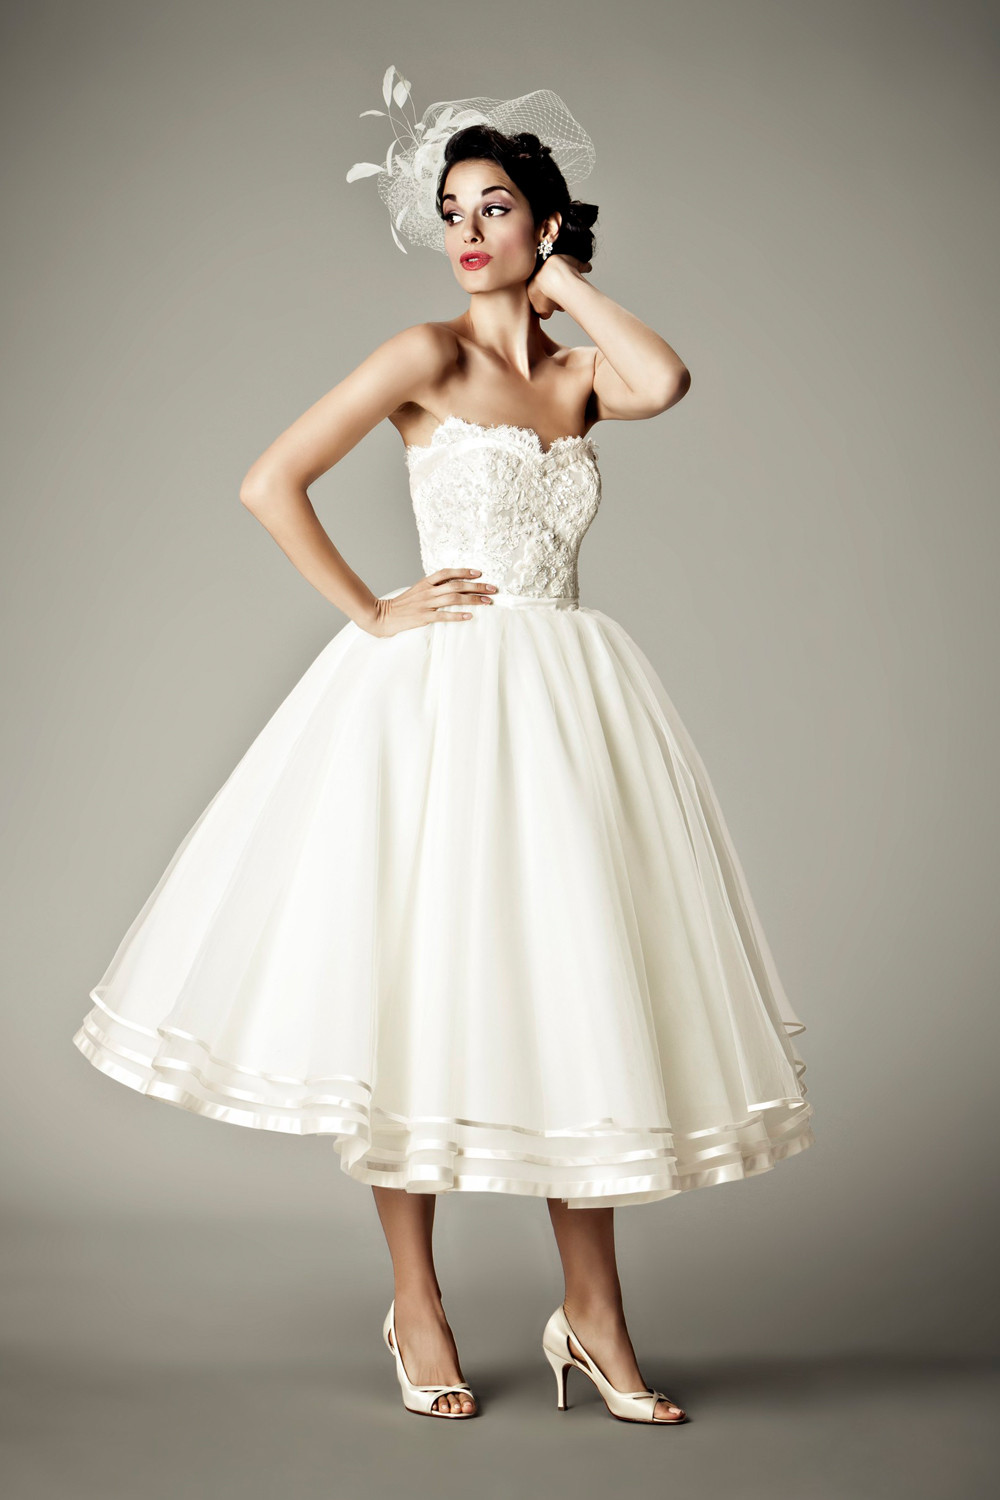 Retro Wedding Dress
 GoS Bridal trends 2012 Vintage inspired wedding dresses